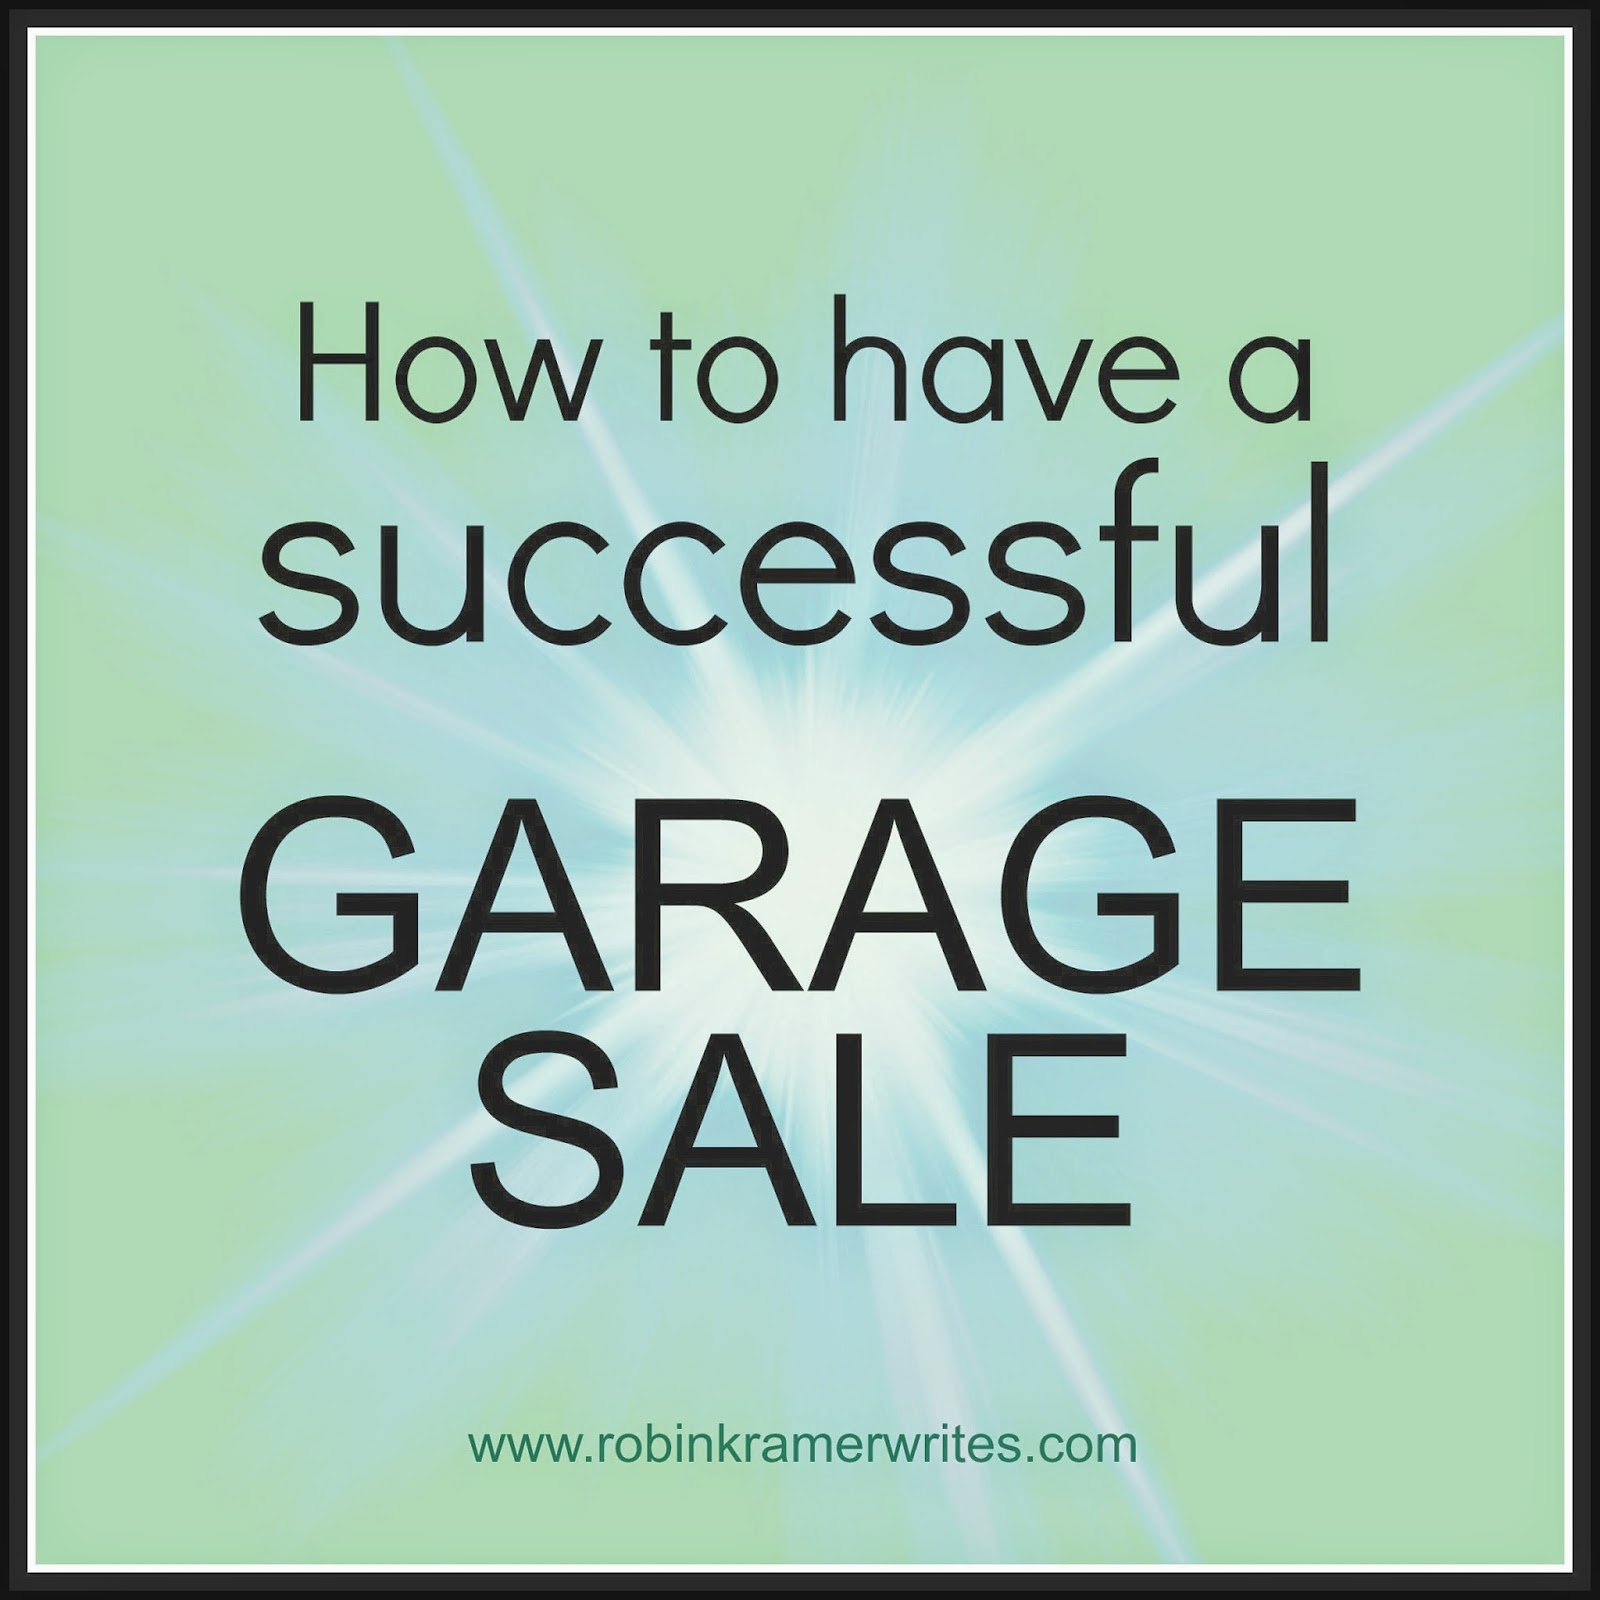 https://3.bp.blogspot.com/-lhHF2dYK46Q/U98Wd15S9LI/AAAAAAAAIqI/7VBy8EAQ0_k/s1600/How+to+Have+a+Successful+Garage+Sale+Yard+Sale+(new).jpg